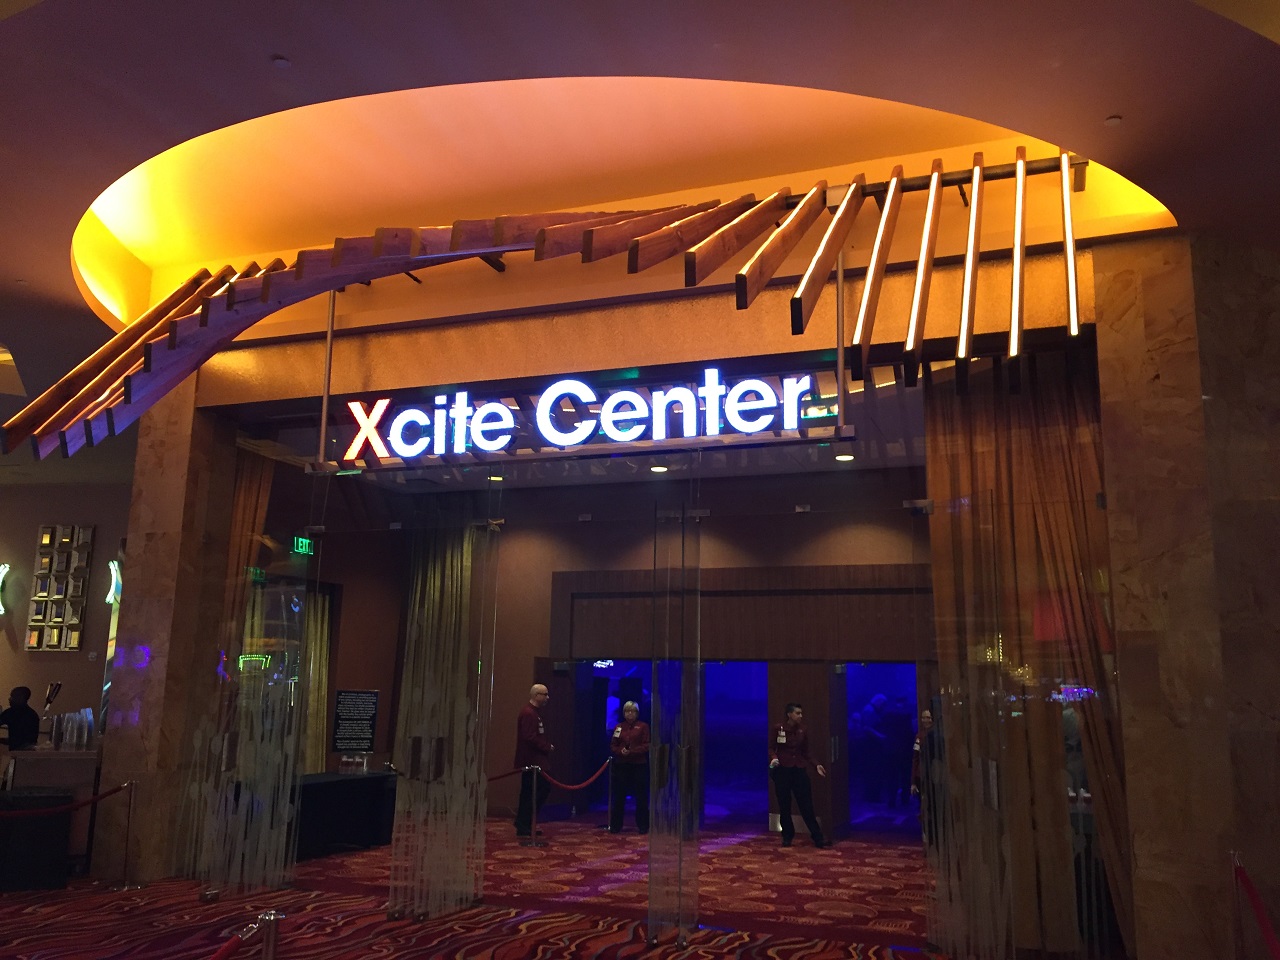 parx casino xcite center shows